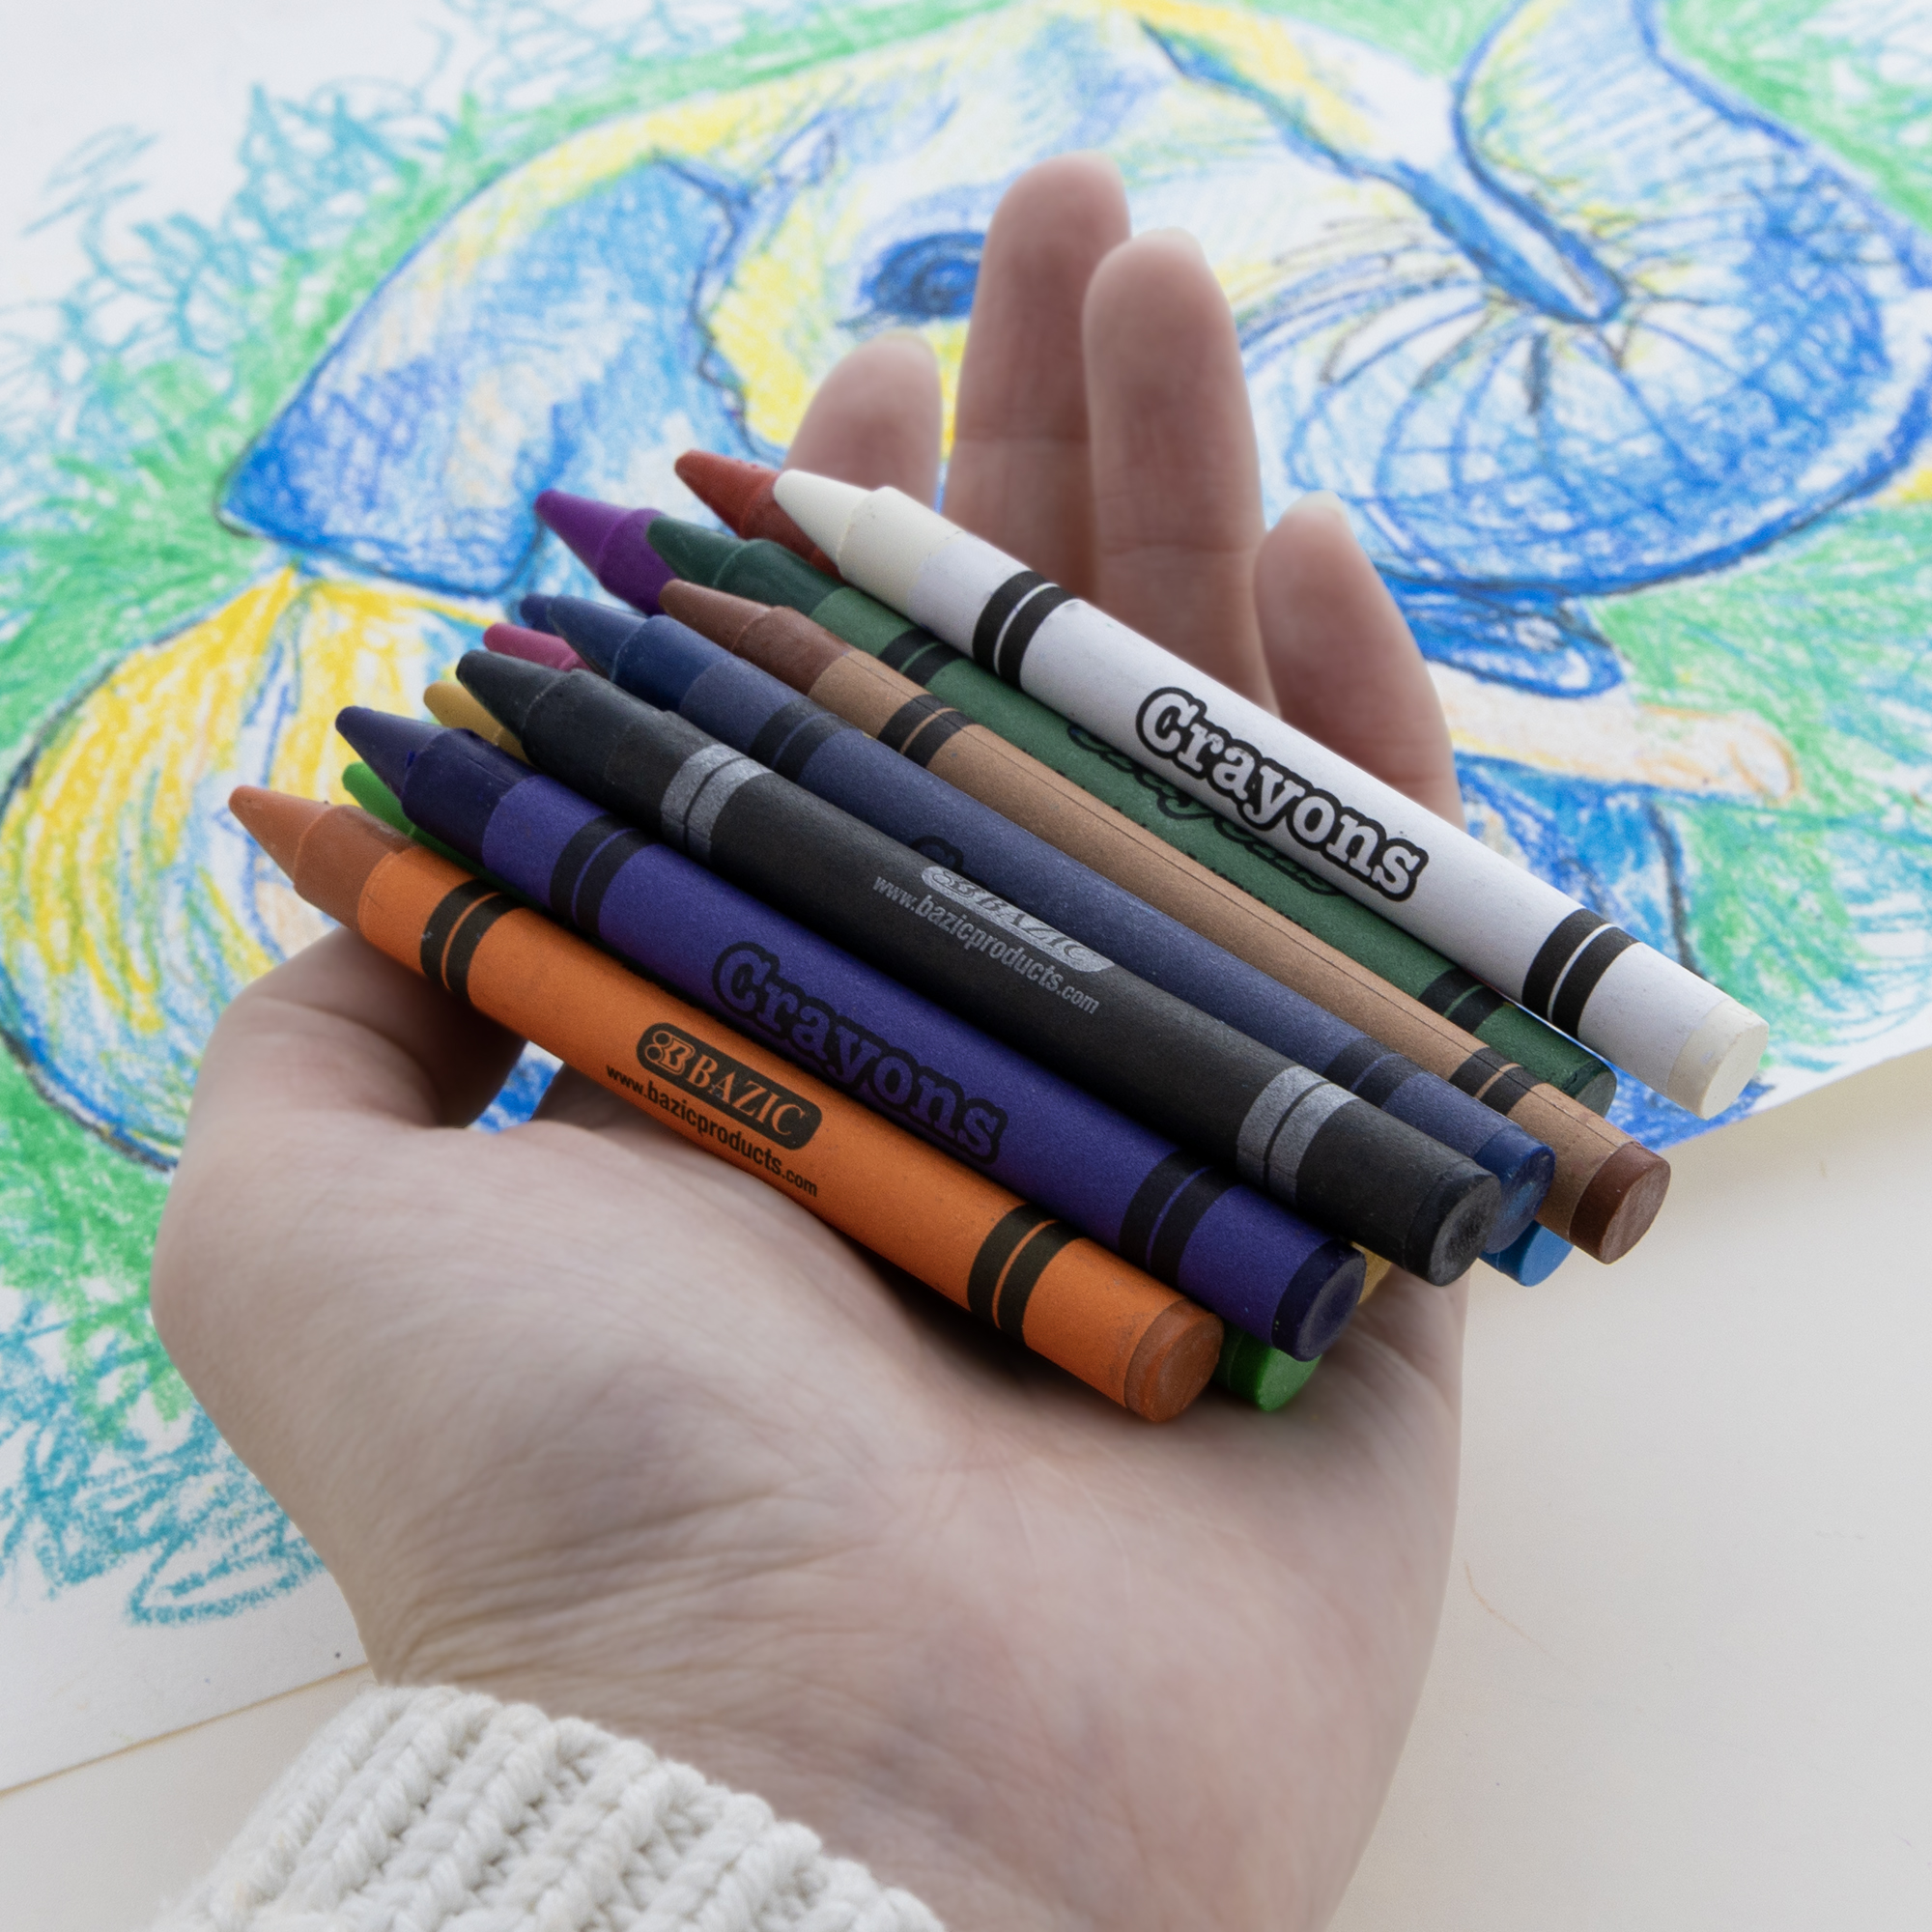 Designer Premium Crayons Mega Pack